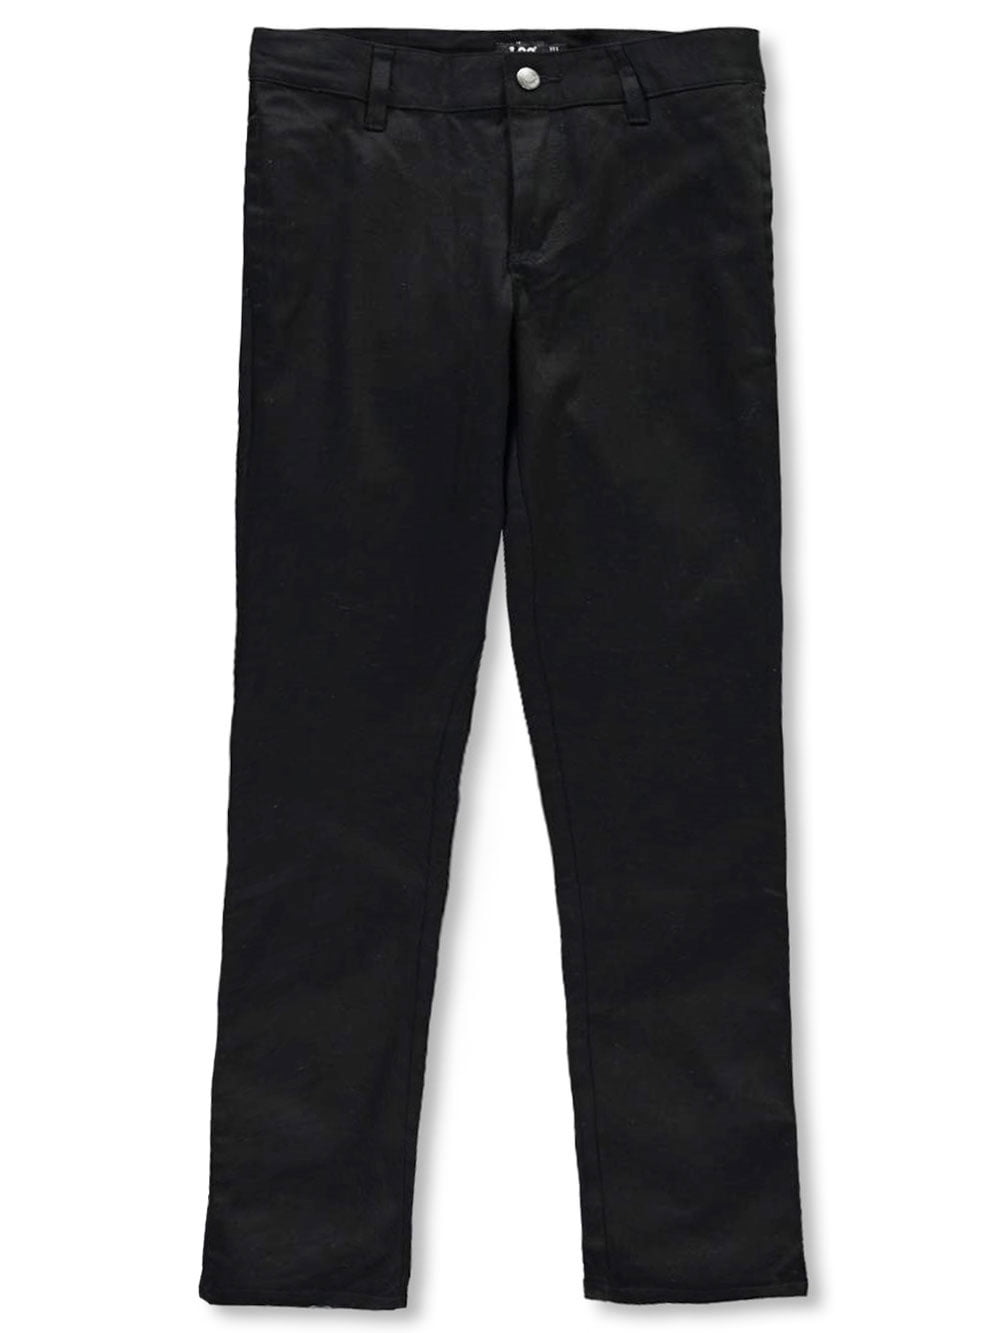 Boys Zip Up Back Elasticated School Uniform Trousers Black Grey Ages 4-11 